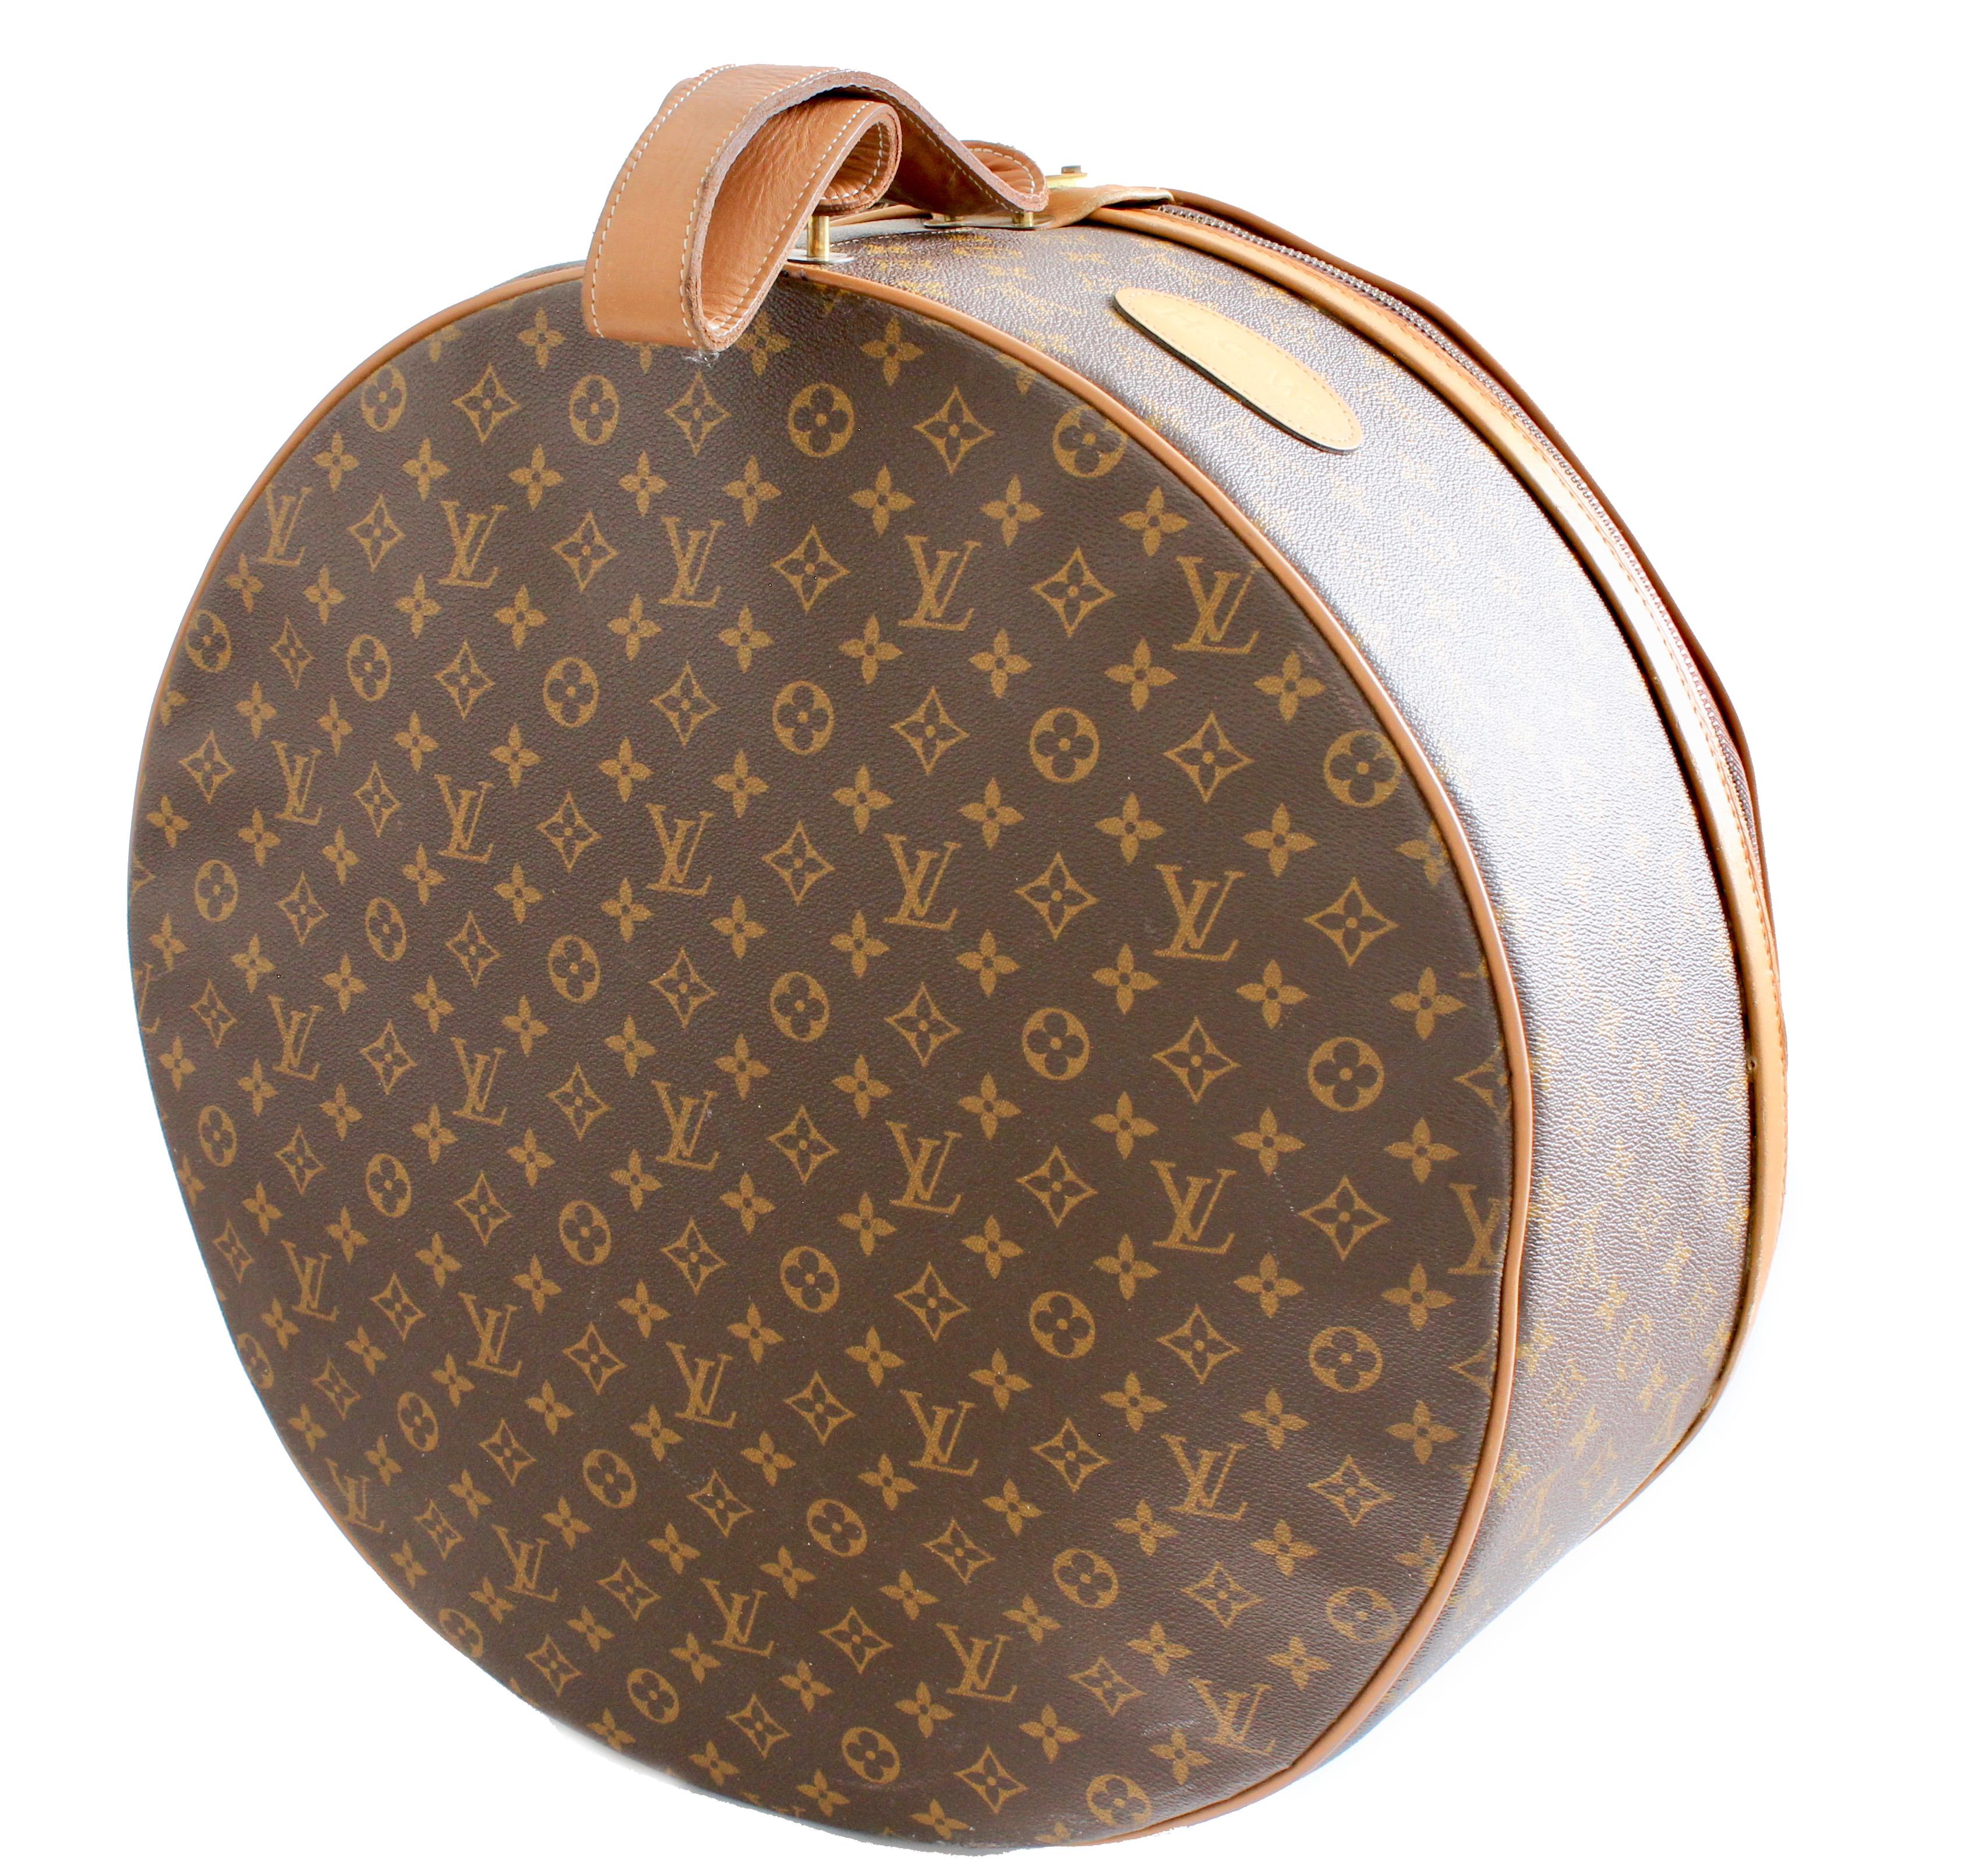 Women's or Men's Louis Vuitton The French Company Boite Chapeaux Round Hat Box 50cm Travel Bag 